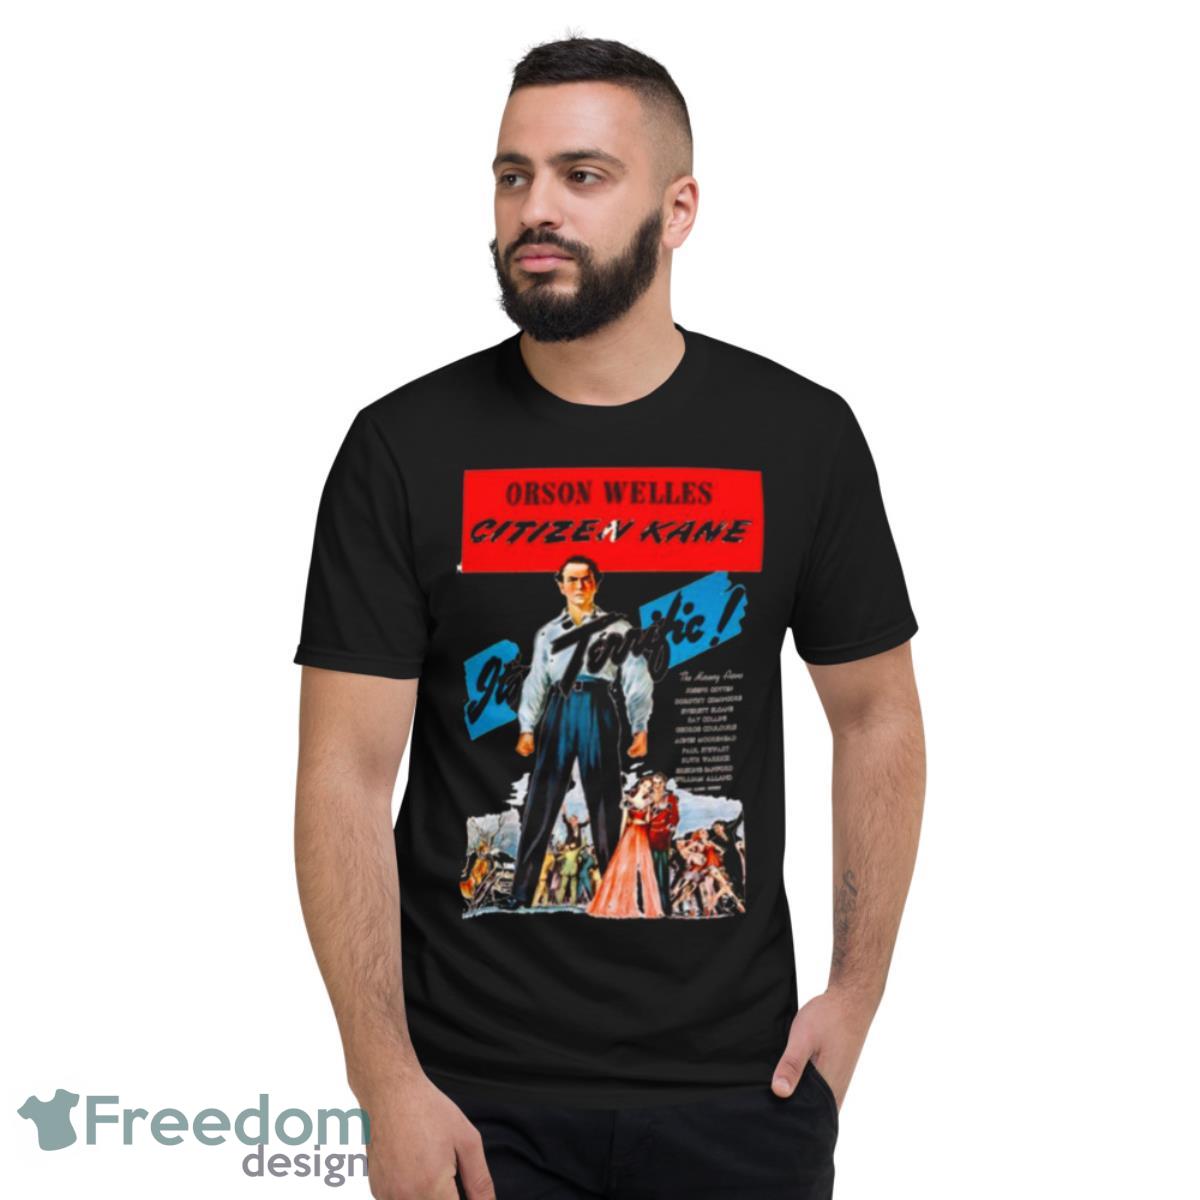 1941 Movie Design Vintage Citizen Kane Shirt - Short Sleeve T-Shirt